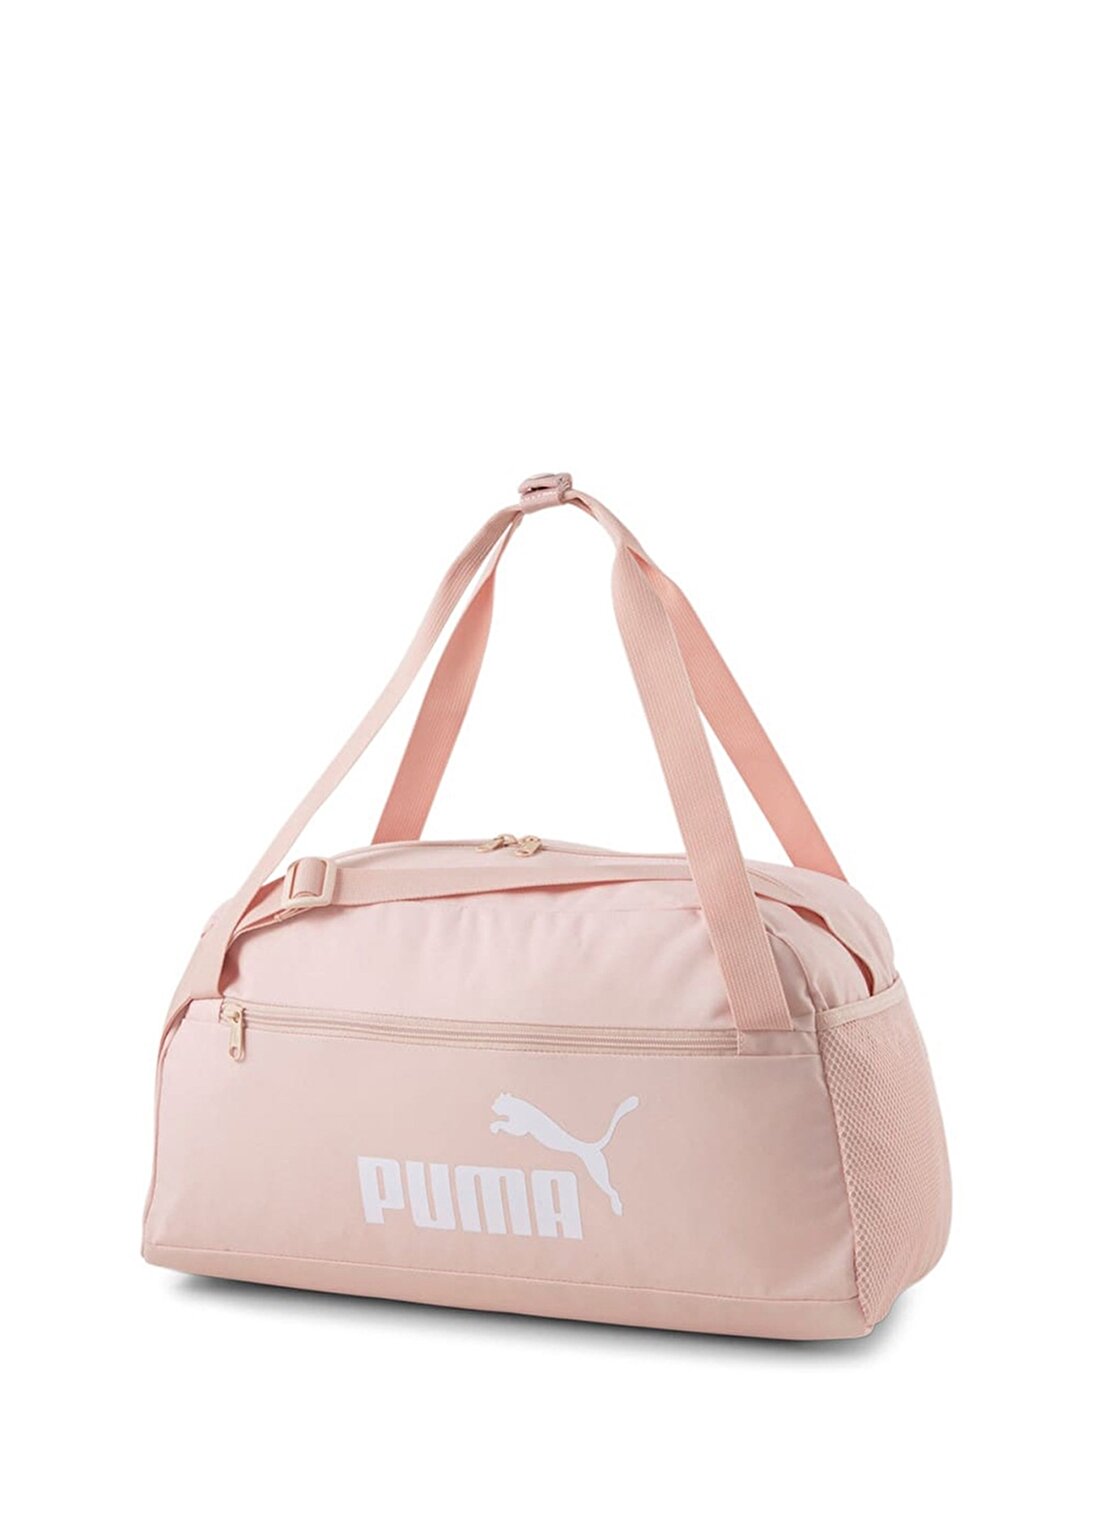 Puma 07803358 Puma Phase Sports Bag Açık Pembe Kadın Sırt Çantası